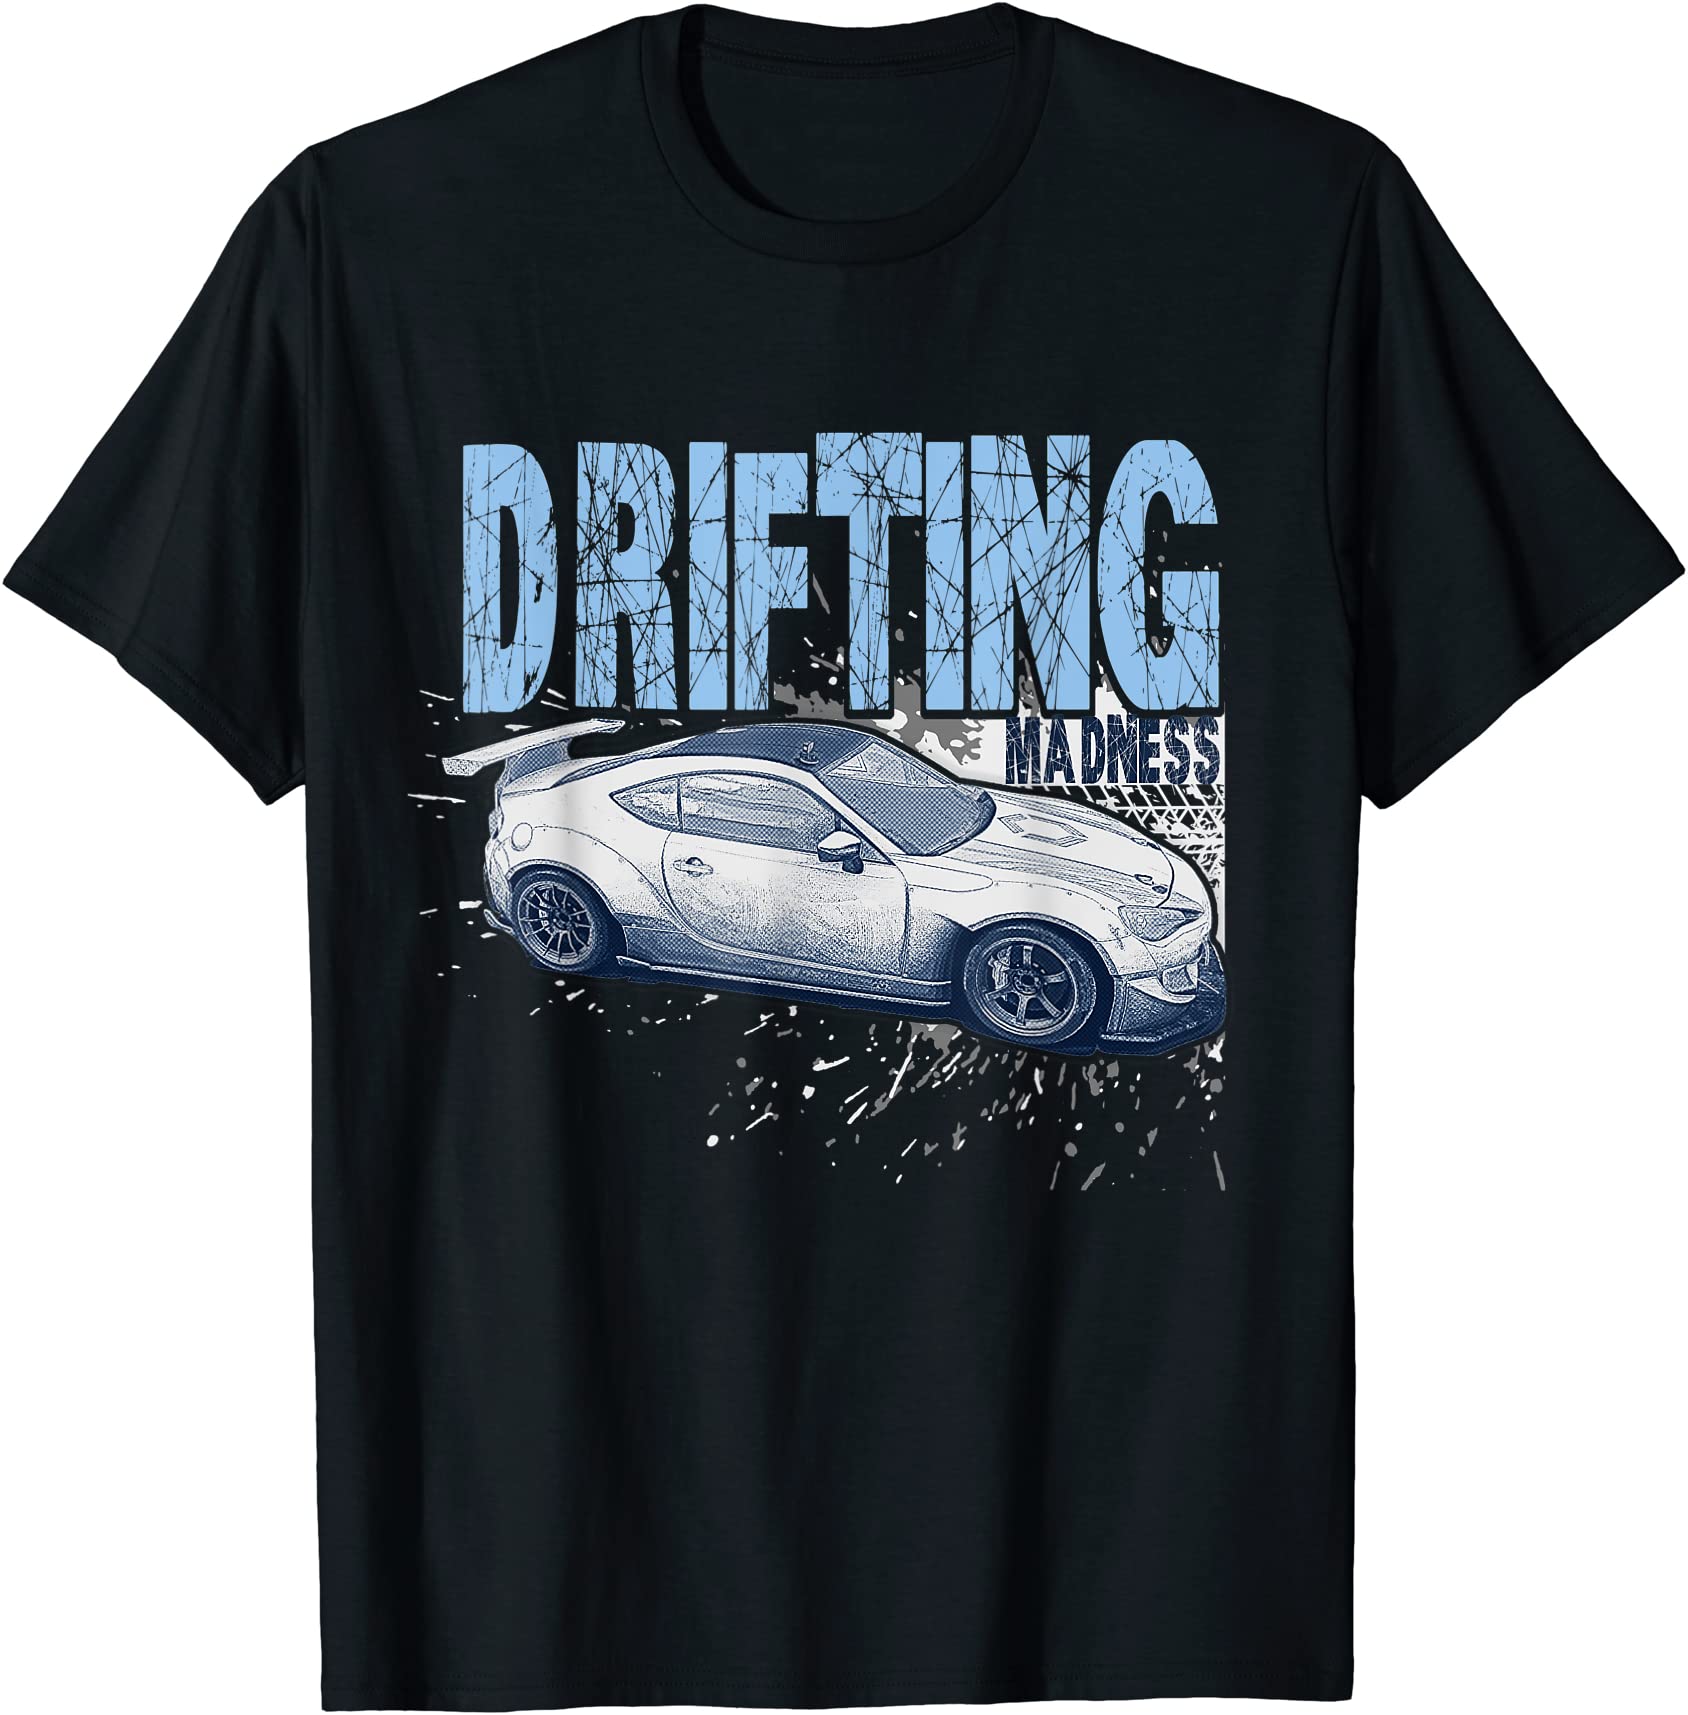 drifting madness drift car burnout race cars t shirt men - Buy t-shirt ...